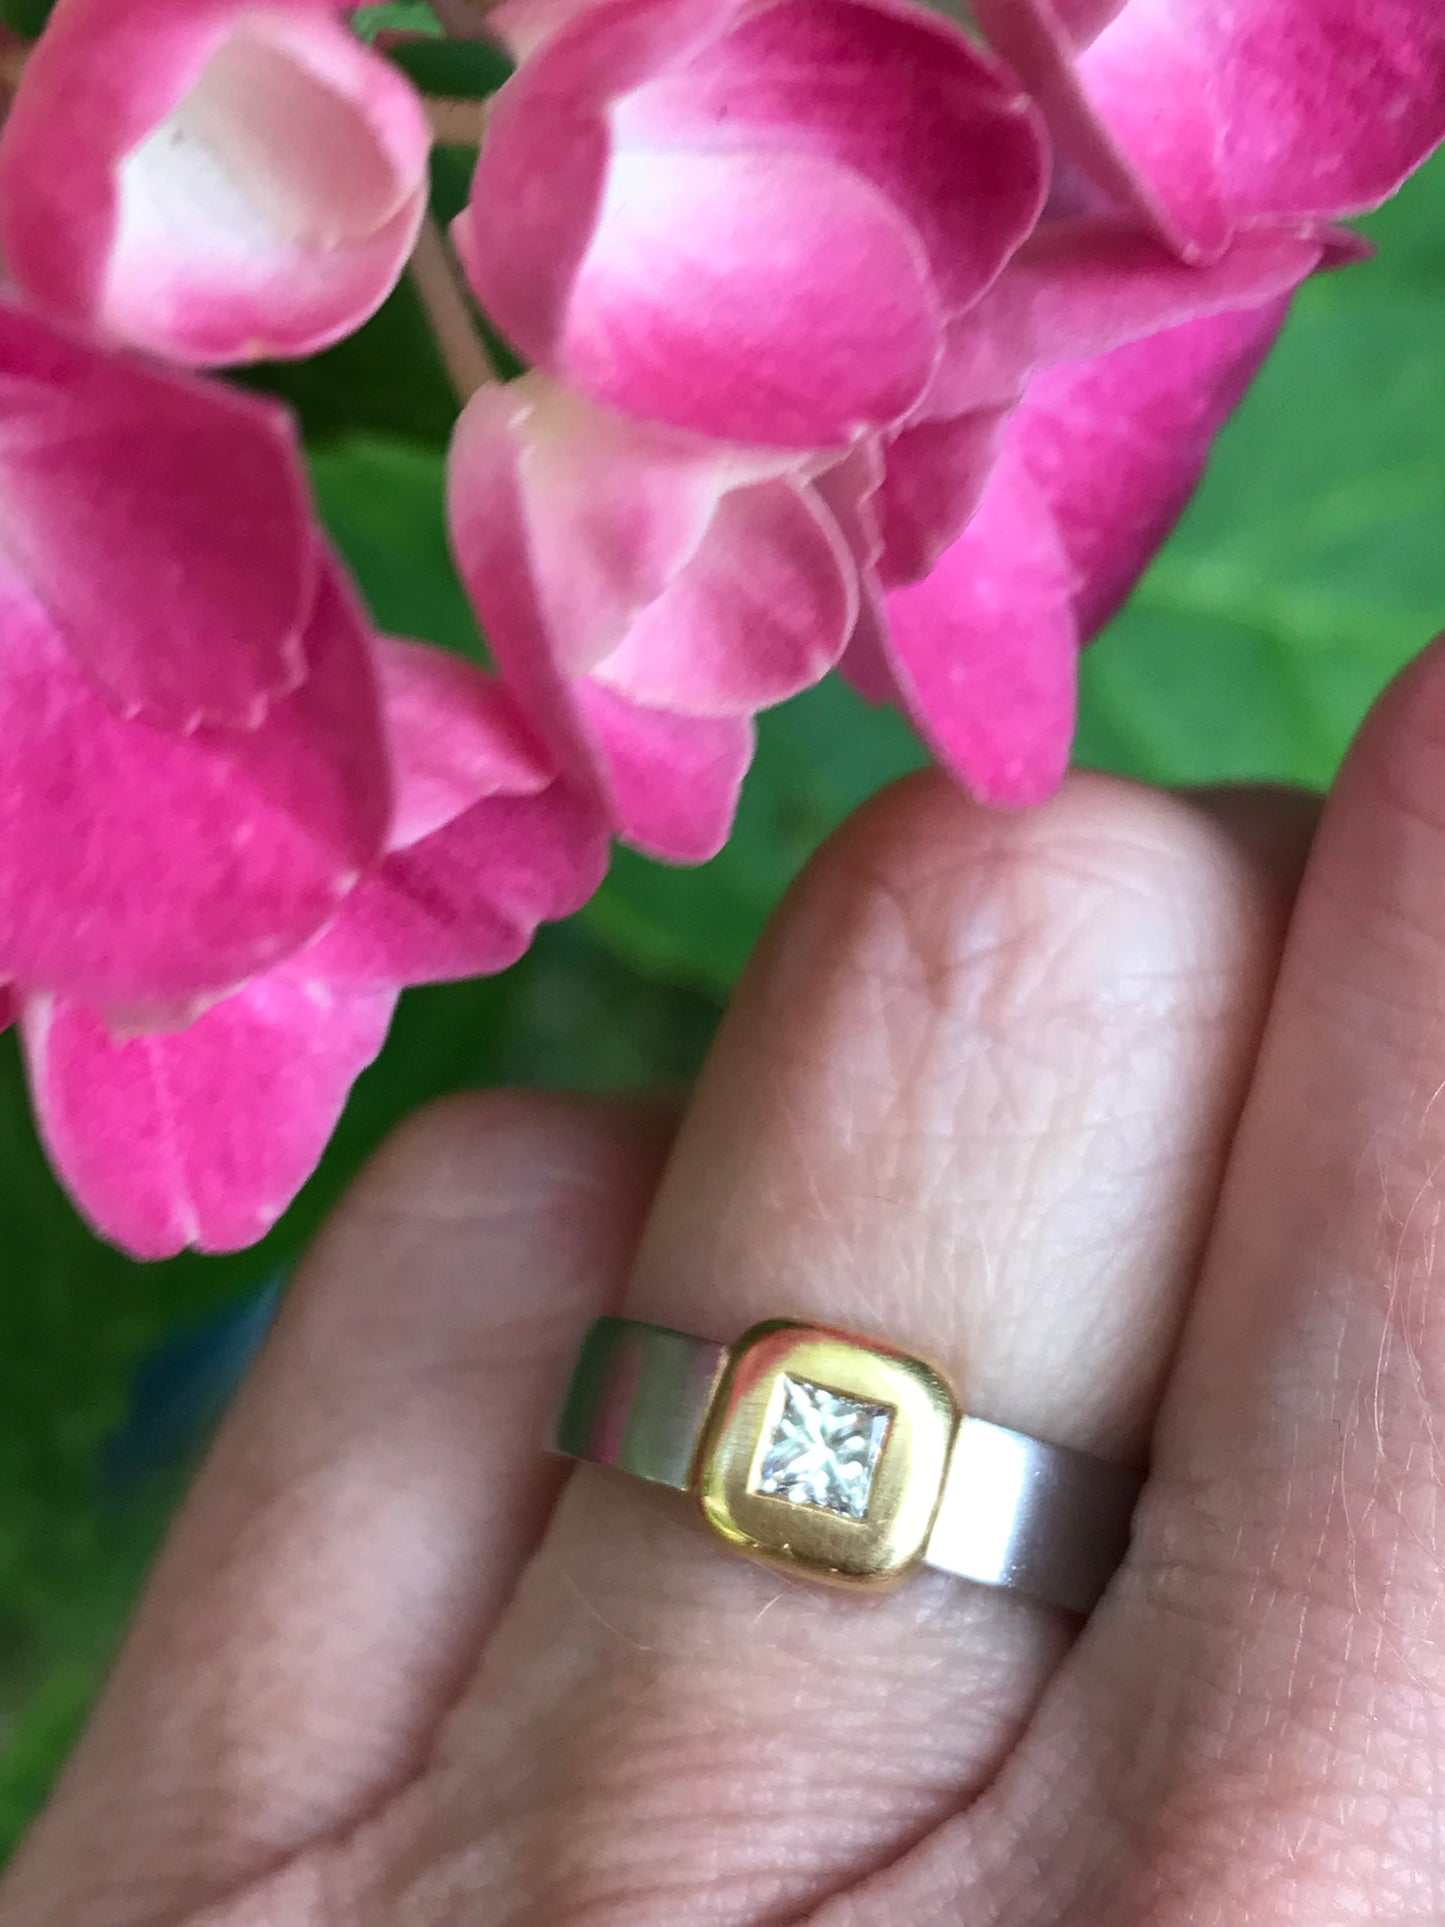 Platinum and 18ct yellow gold 0.20ct princess diamond ring Ring Rock Lobster   